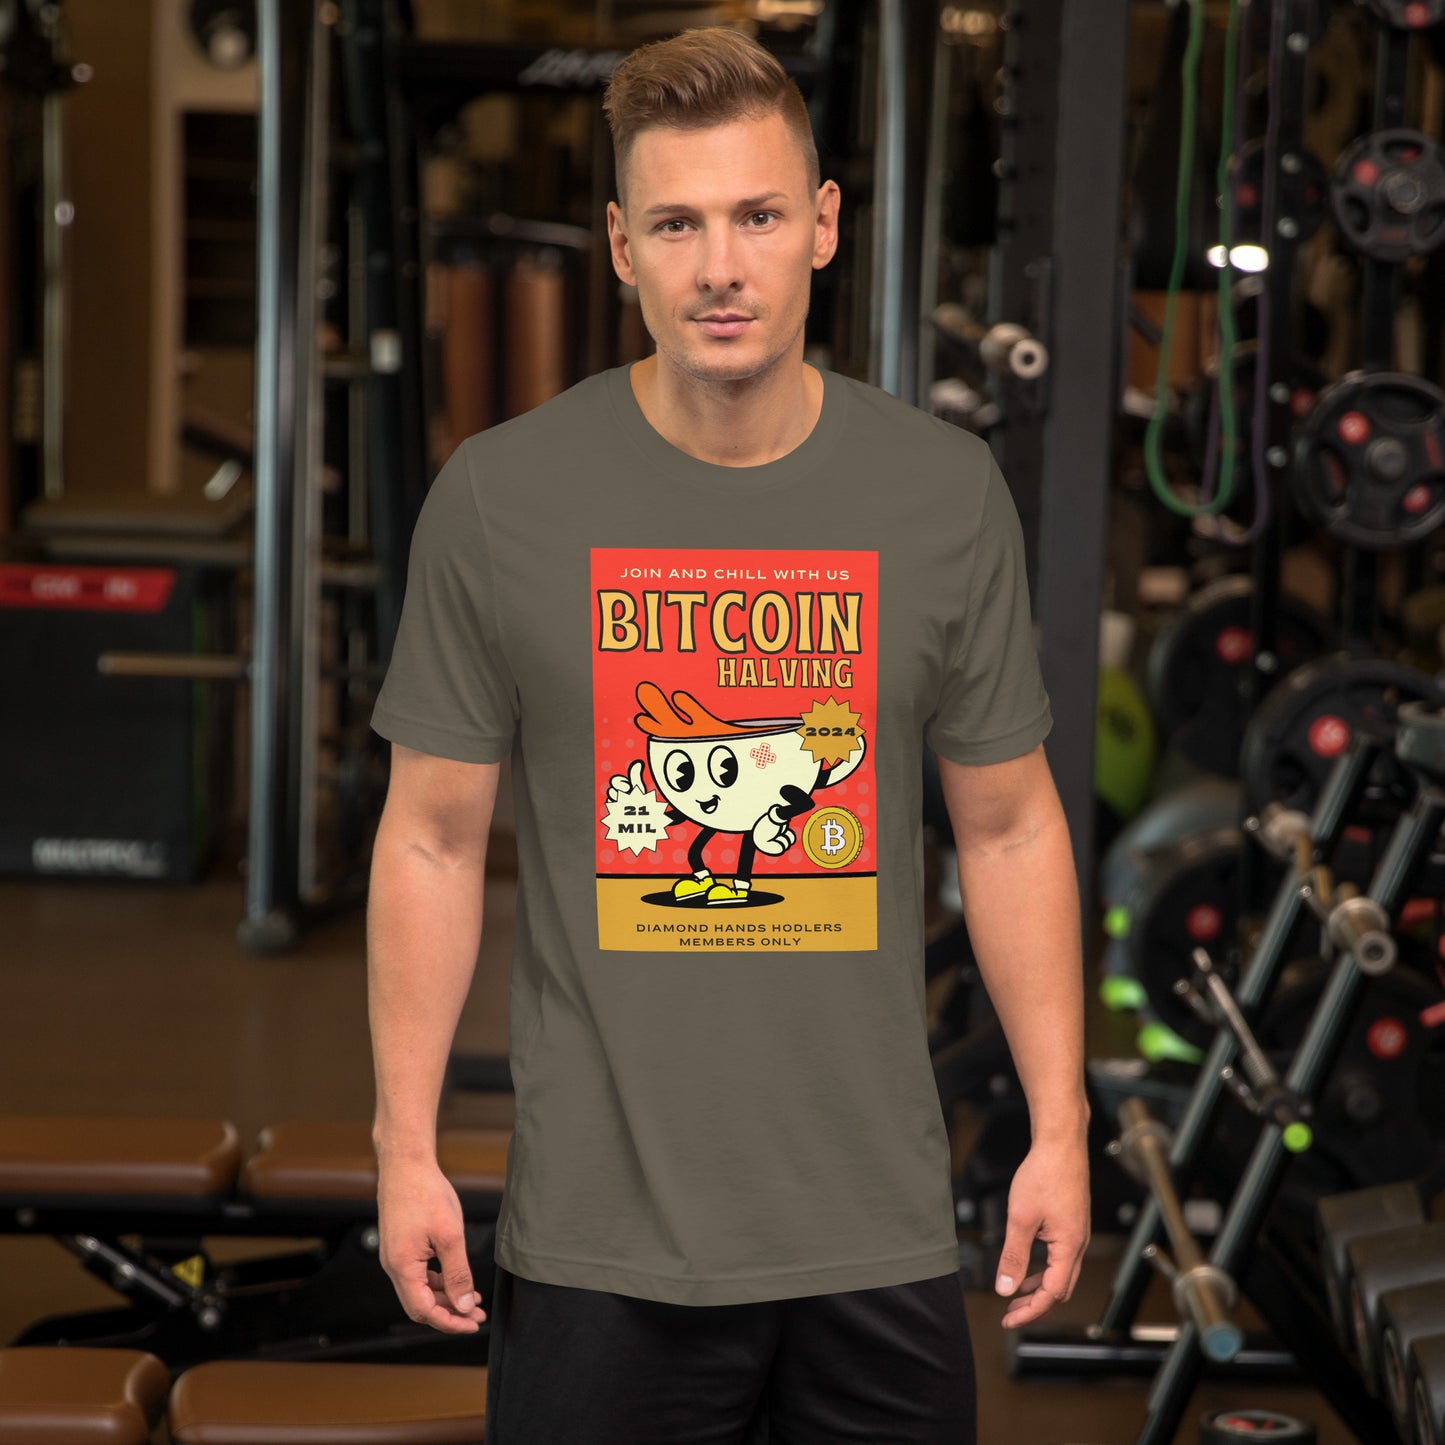 Bitcoin Retro 70s T-Shirt